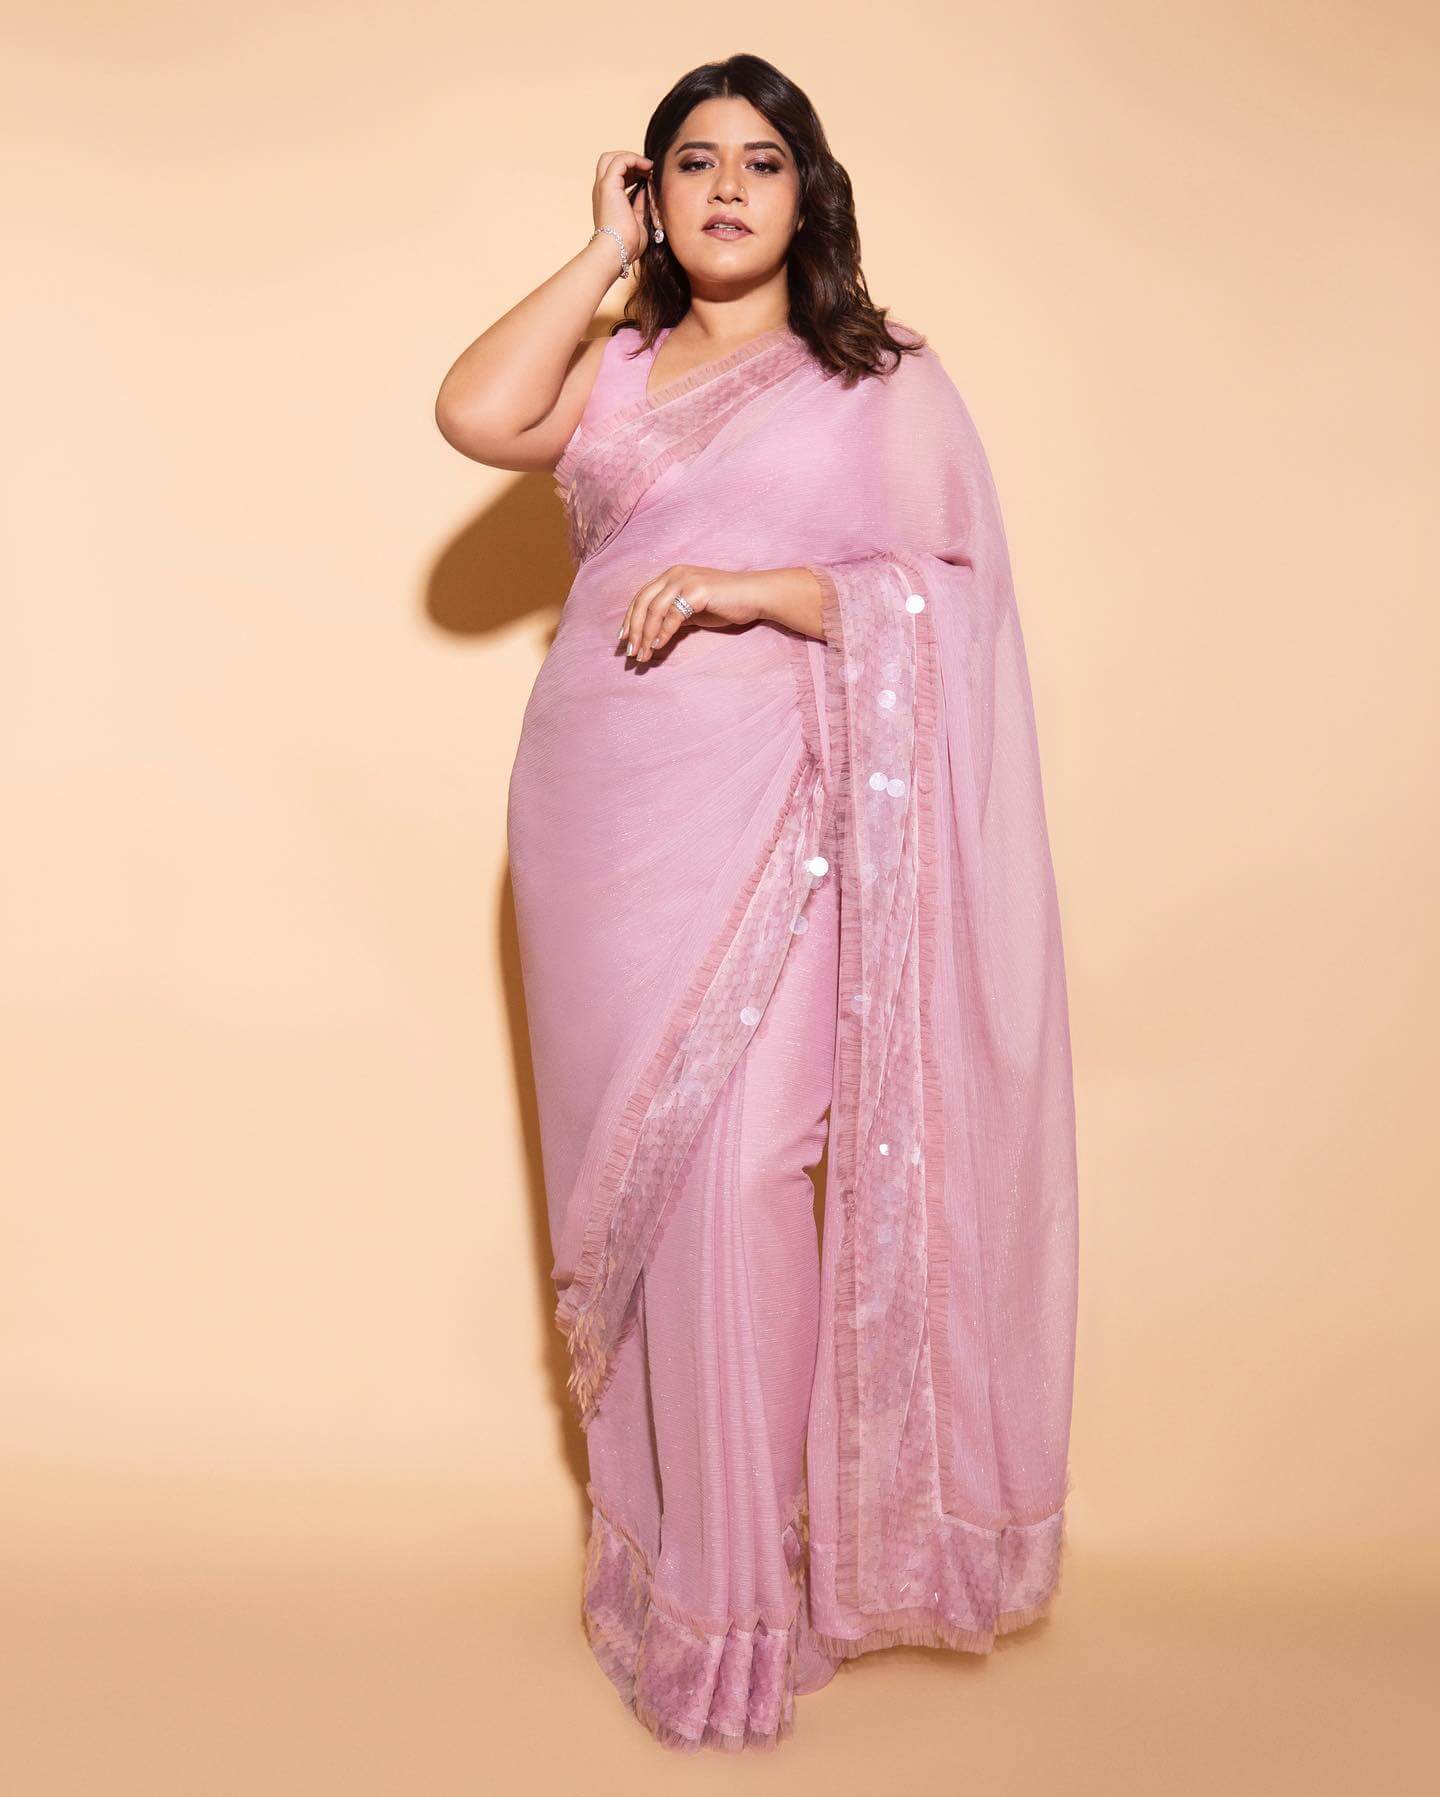 Actress Shikha Talsania in pink saree